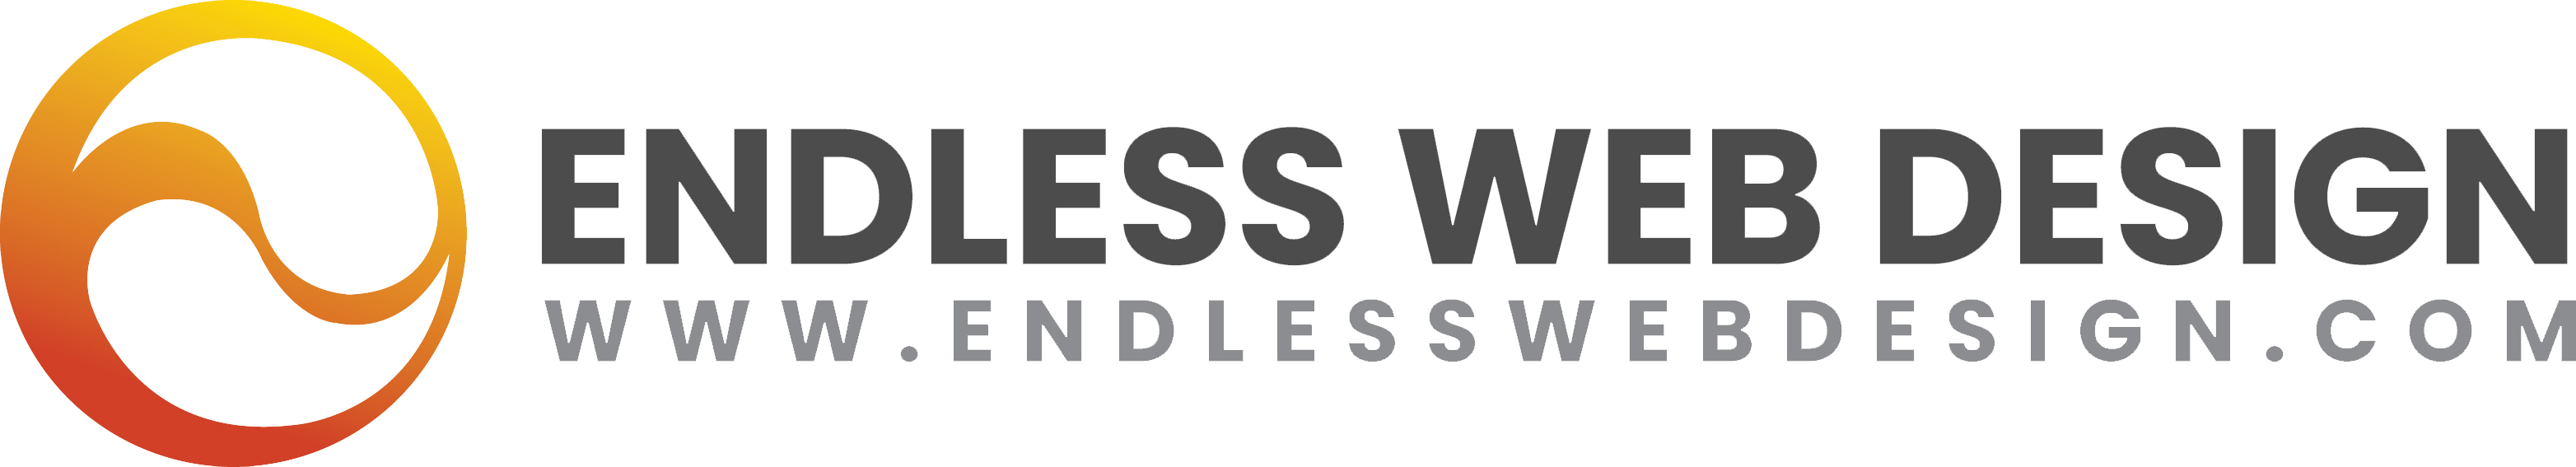 Endless Web Design – Graphic Design – SEO